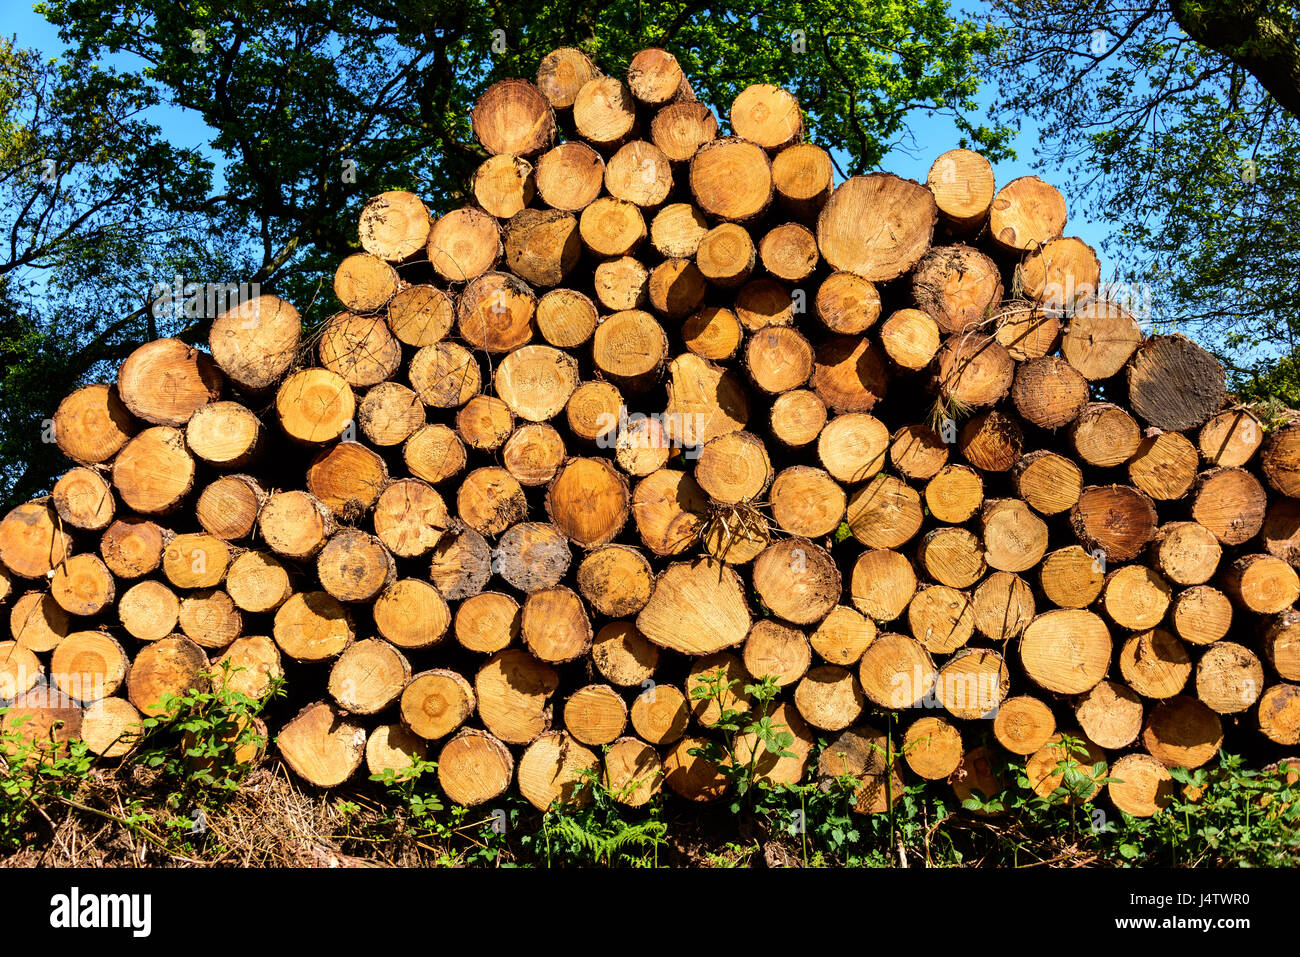 Felled pine trees in Peckforton, Cheshire, UK Stock Photo